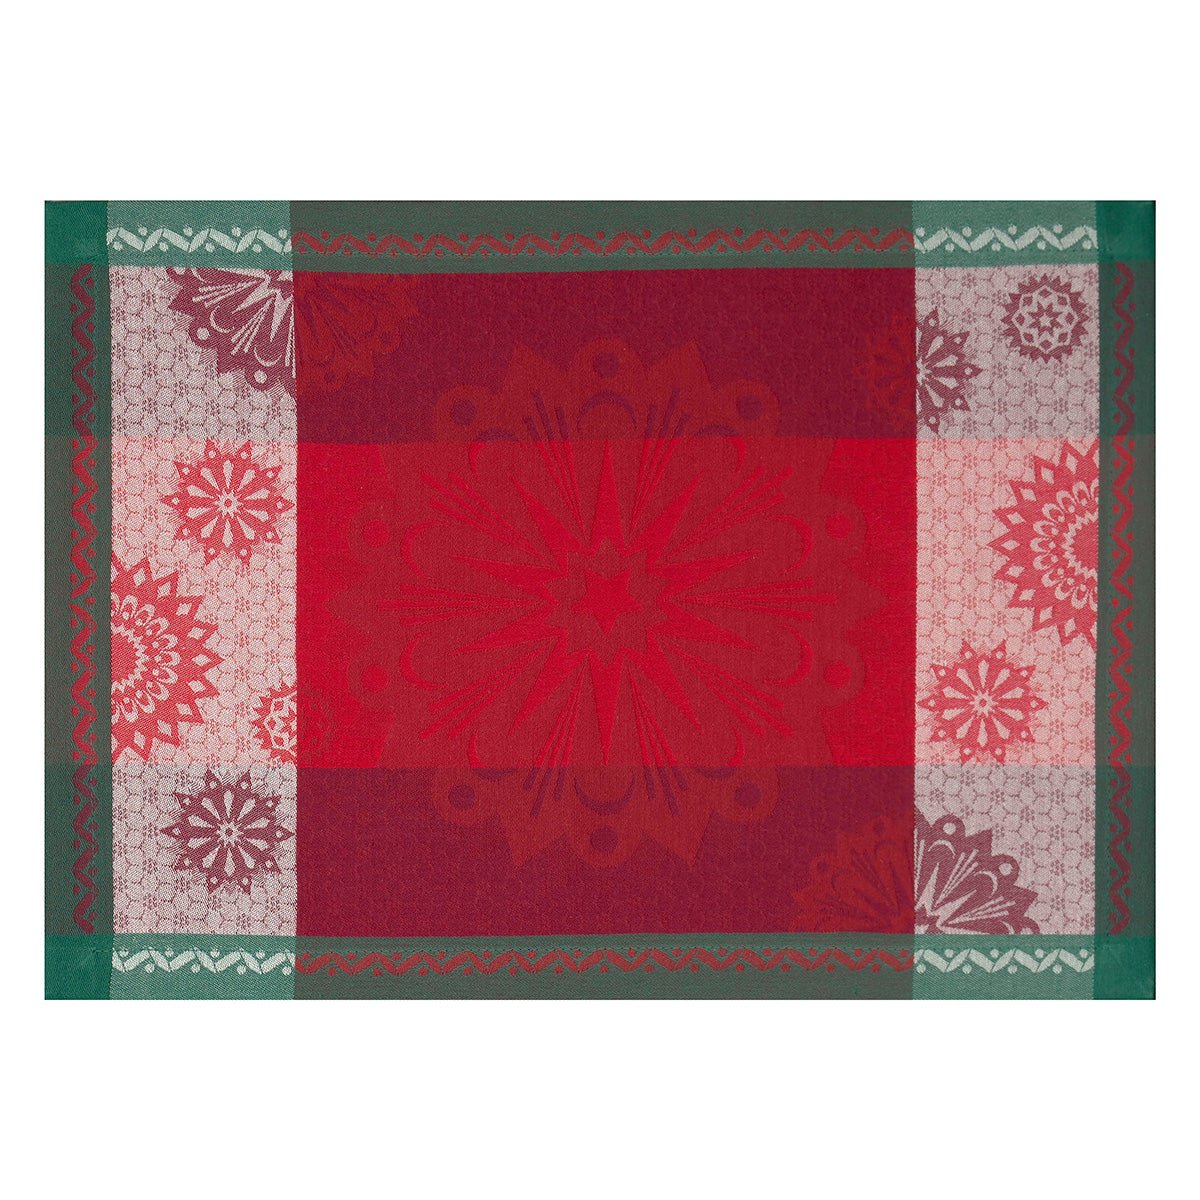 lumière d'étoiles red placemat by Le Jacquard Francais Christmas Table Linens at Fig Linens and Home